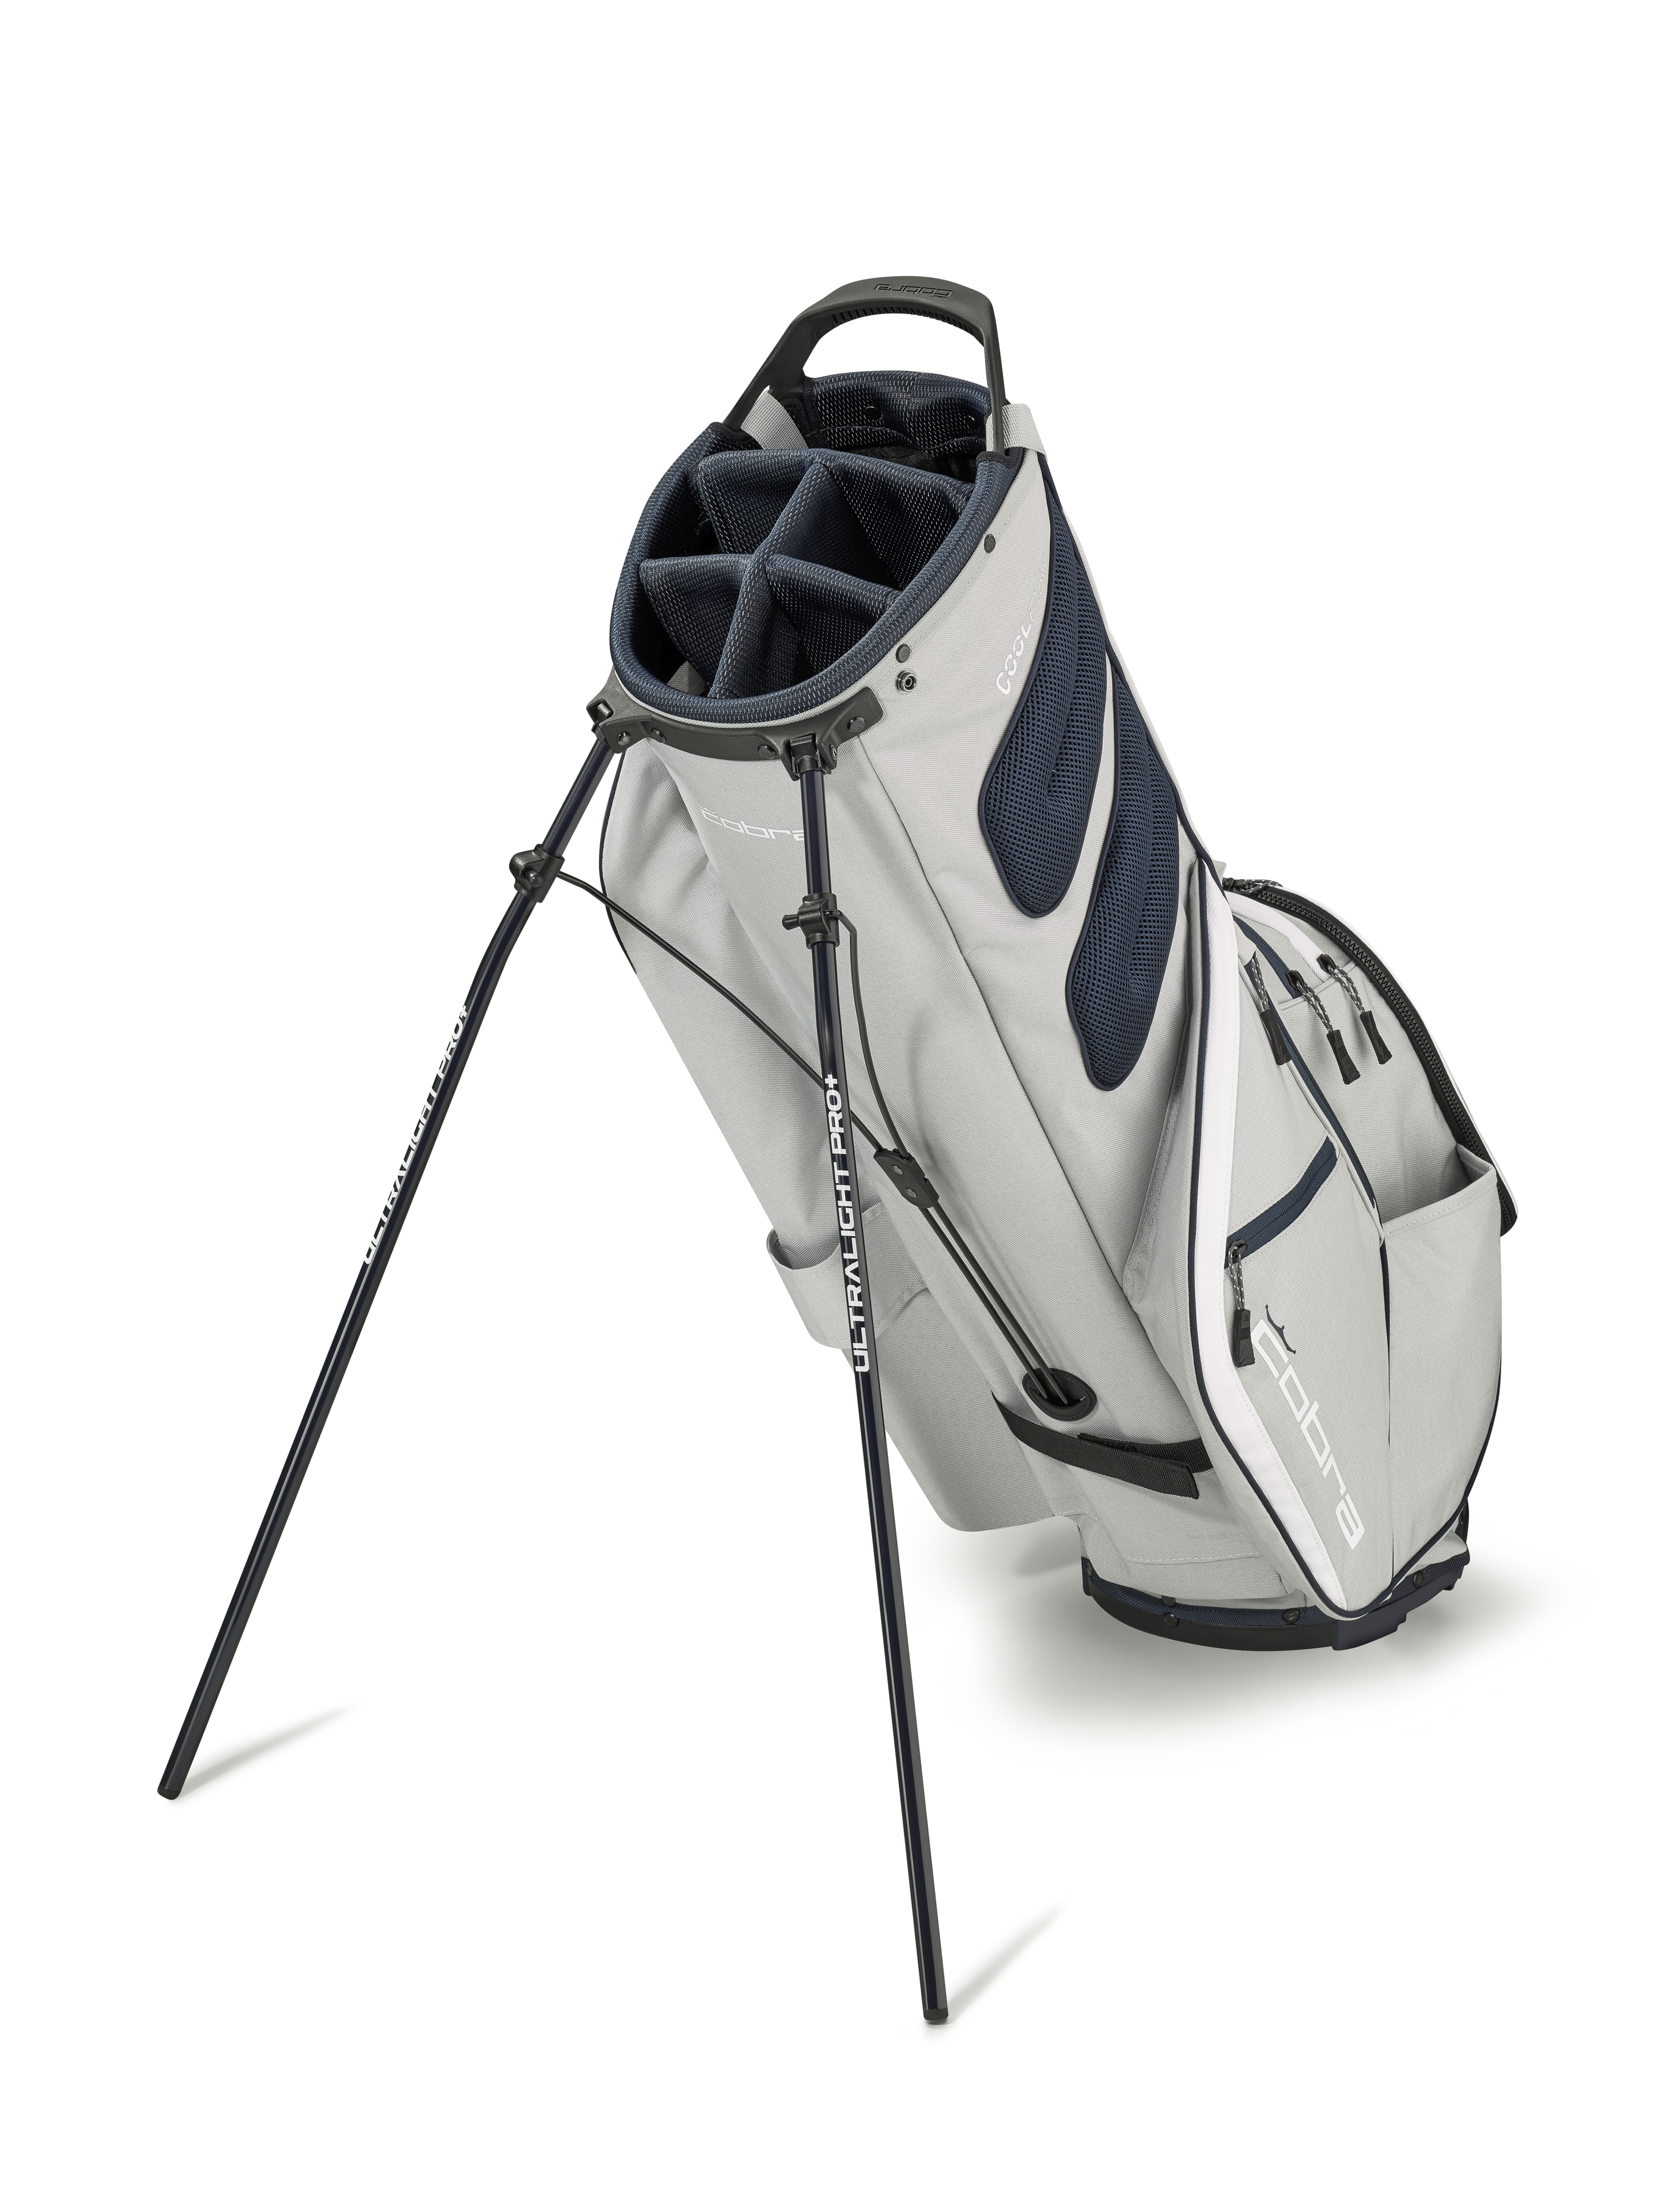 Golf-Standbag, Ultralight Pro - grau / navy, Polyester